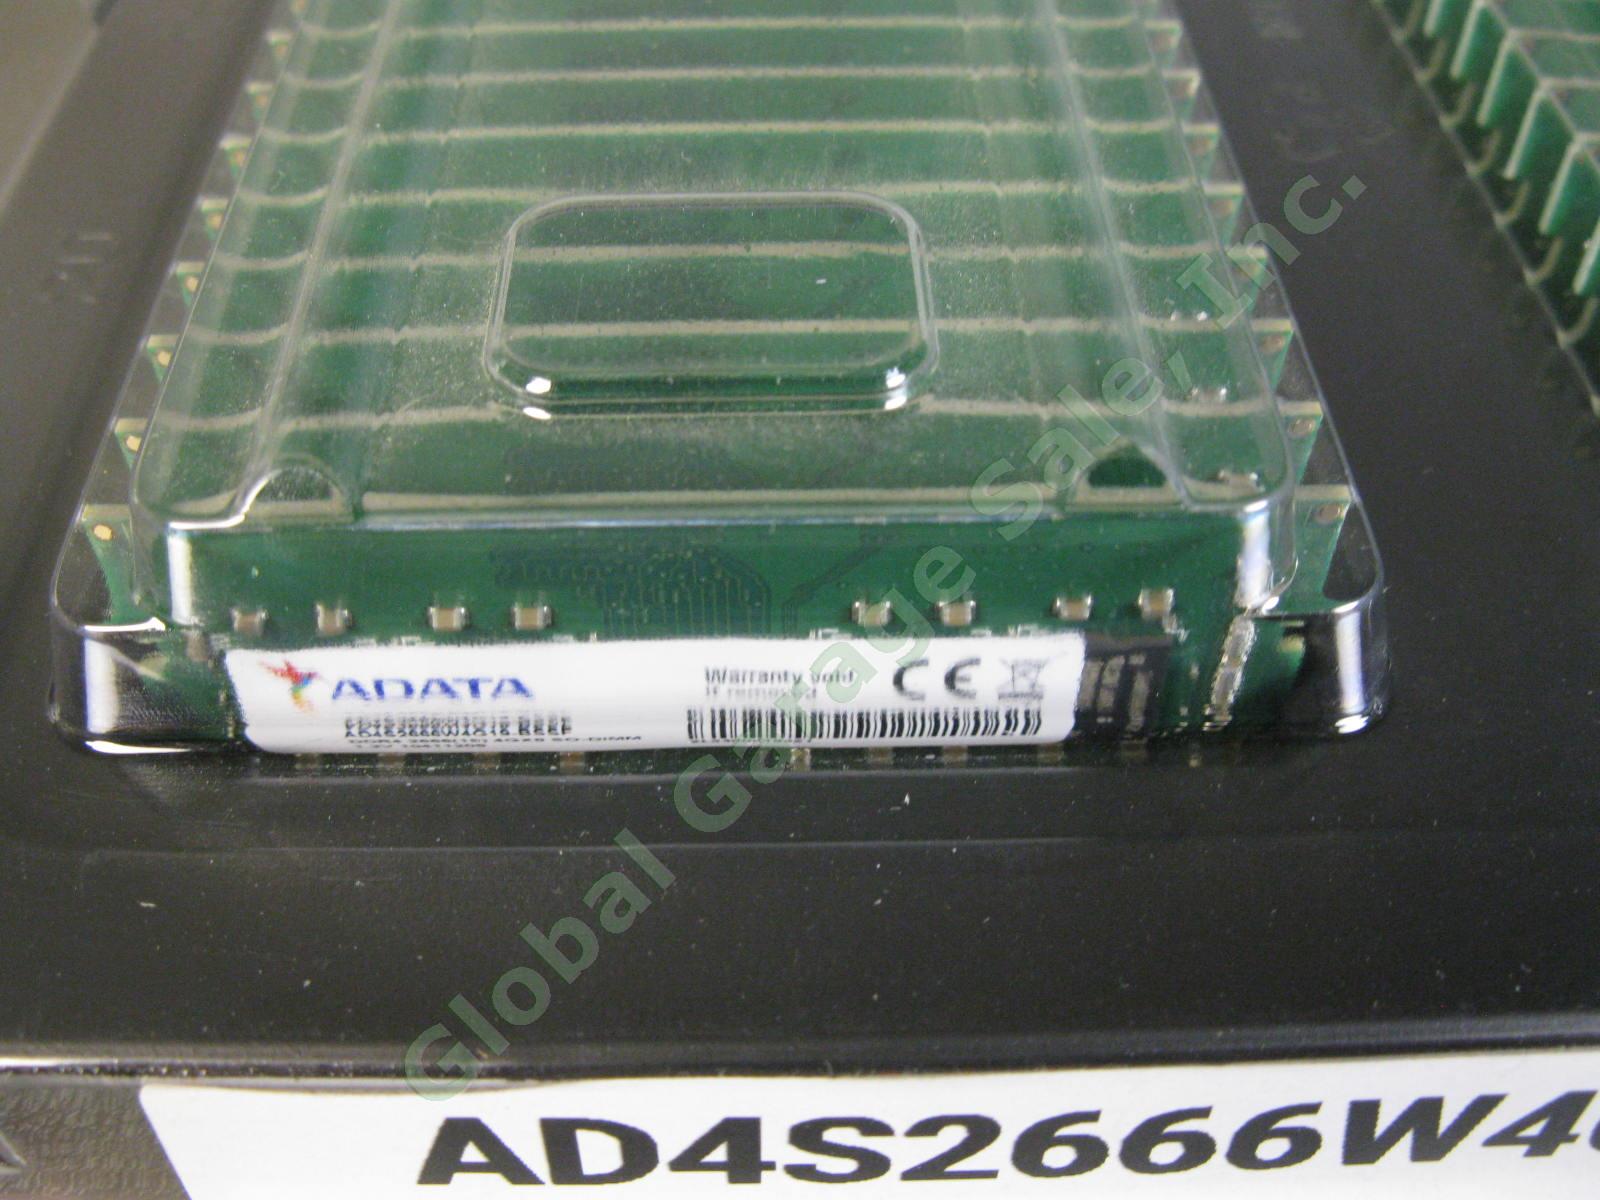 50 ADATA 4GB DDR4 2666MHz 4Gx8 SODIMM 260-Pin DRAM Laptop Memory AD4S2666W4G19 1